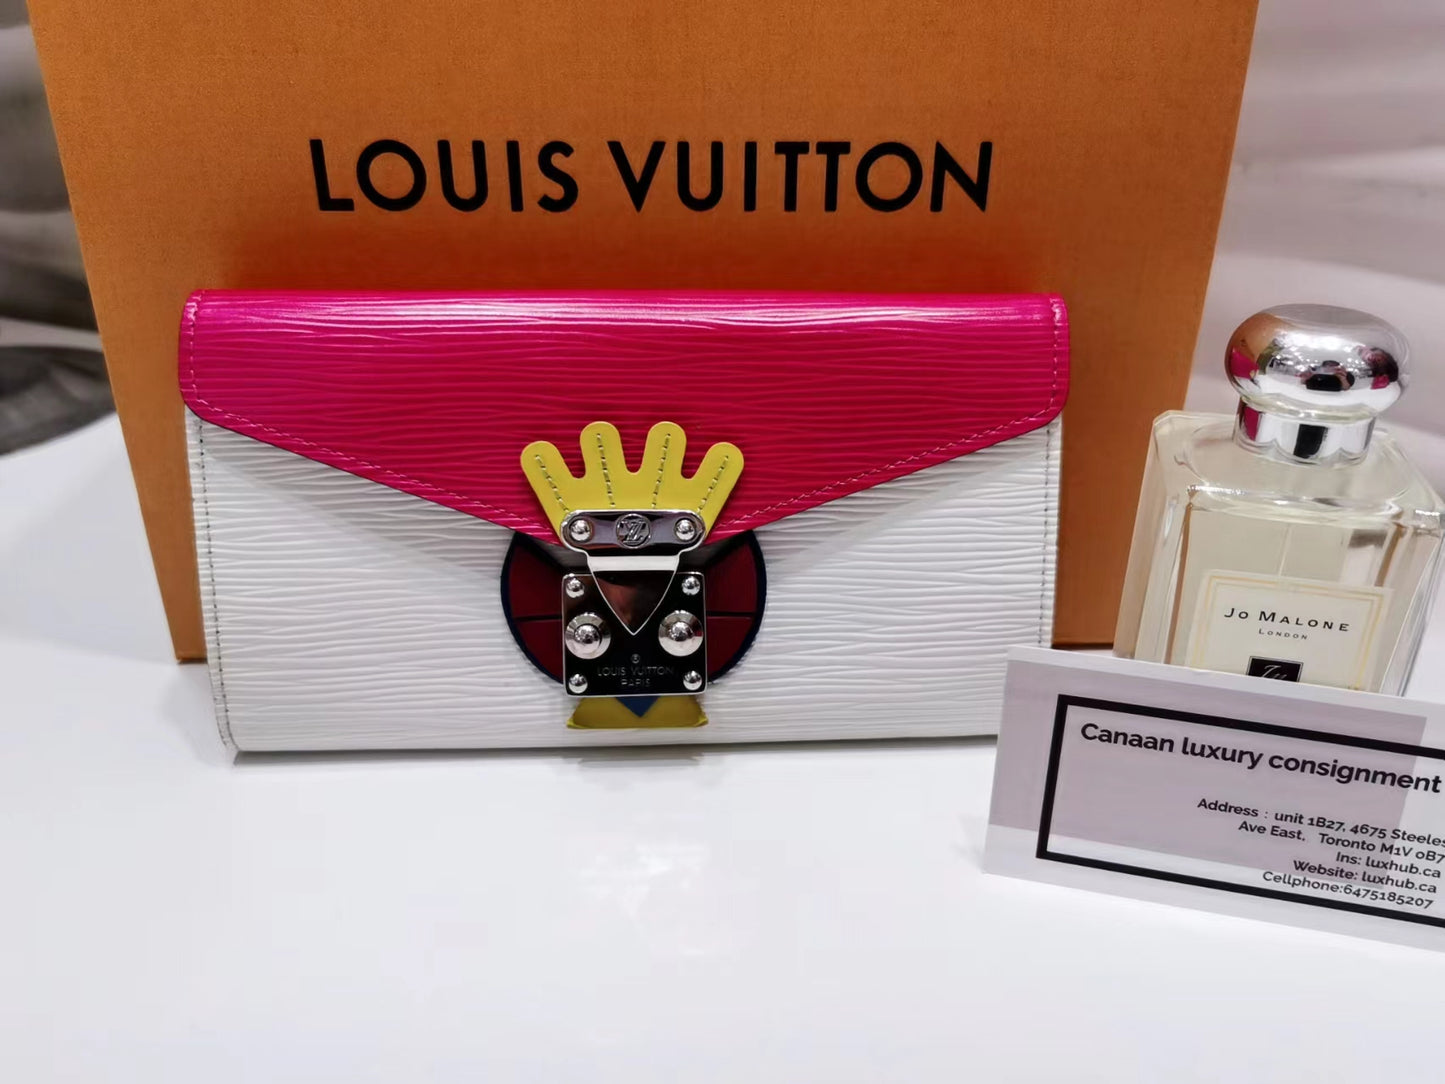 Louis Vuitton Limited Edition Epi Leather Tribal Mask Sarah